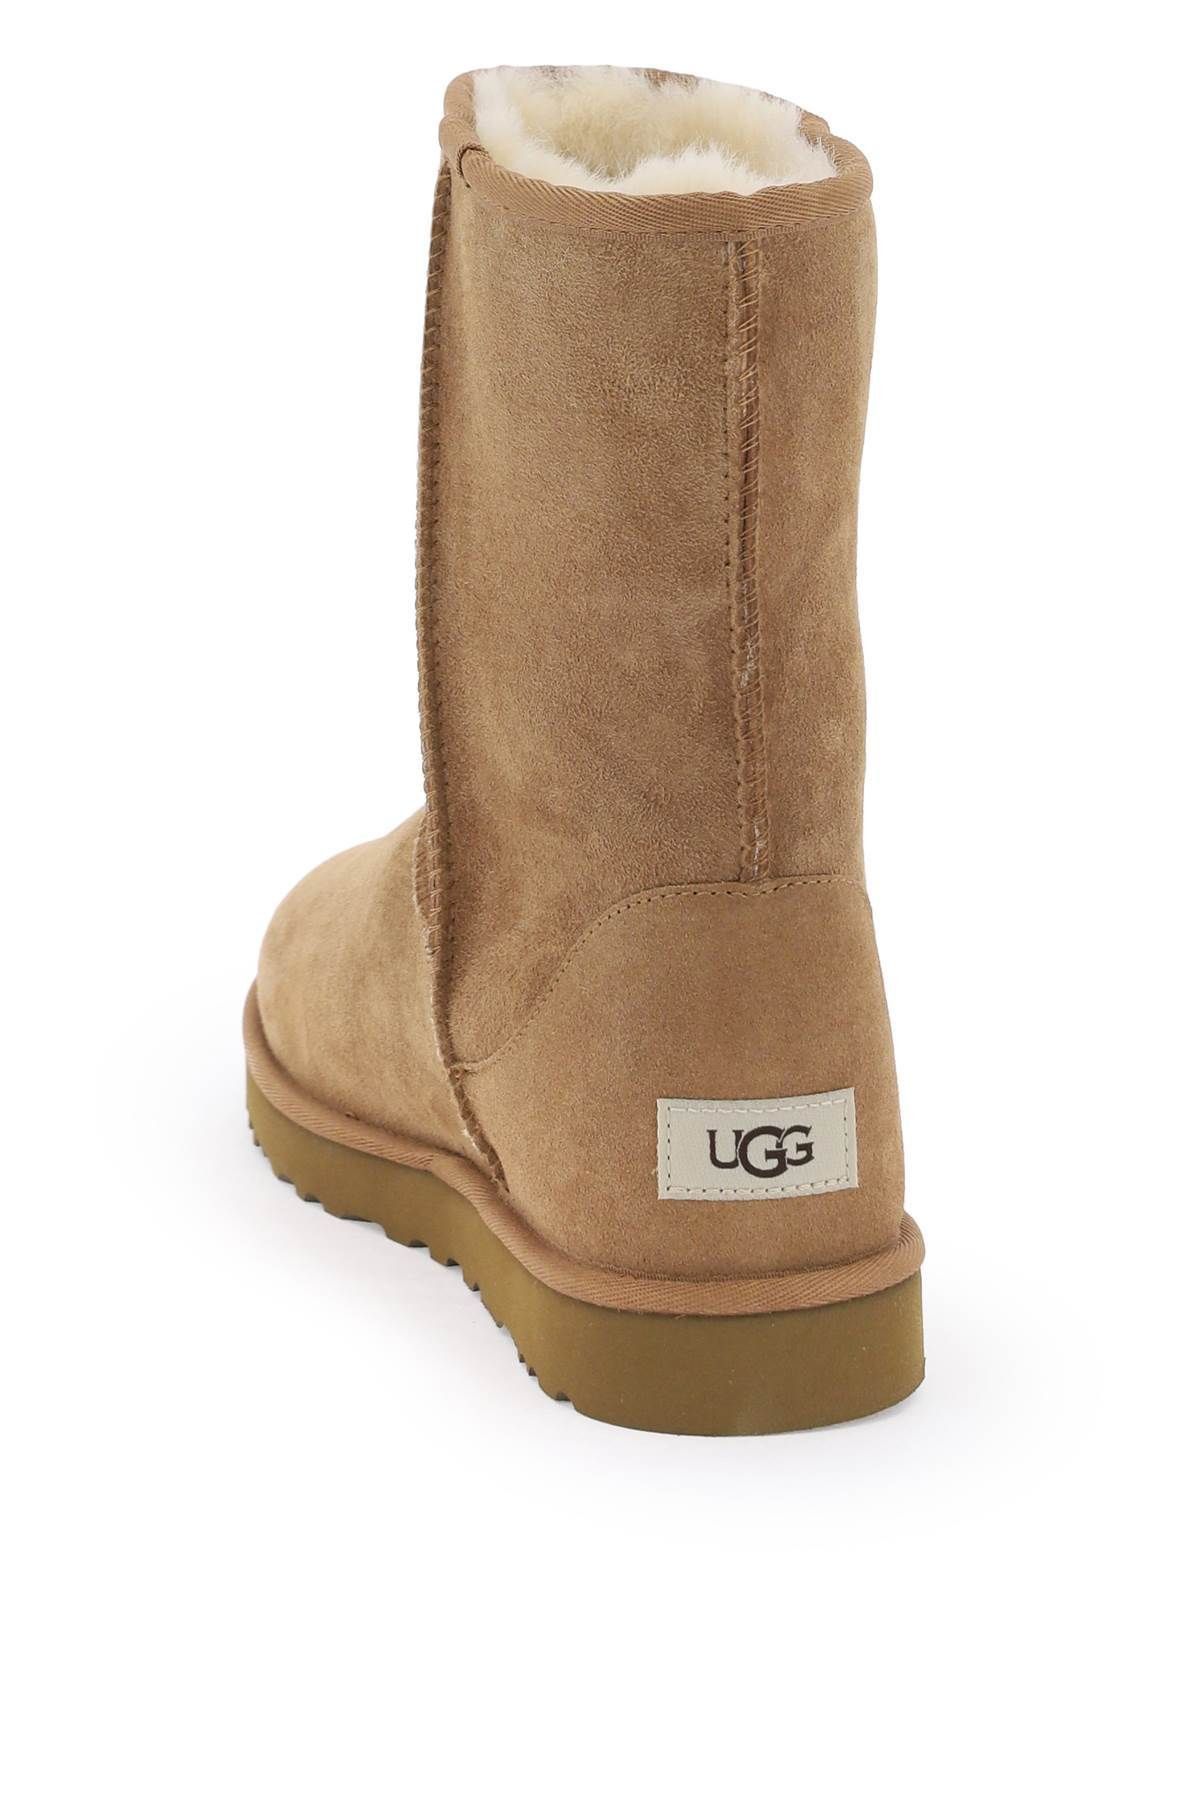 Ugg - Classic Short Boots Size EU 41 for Men - 2